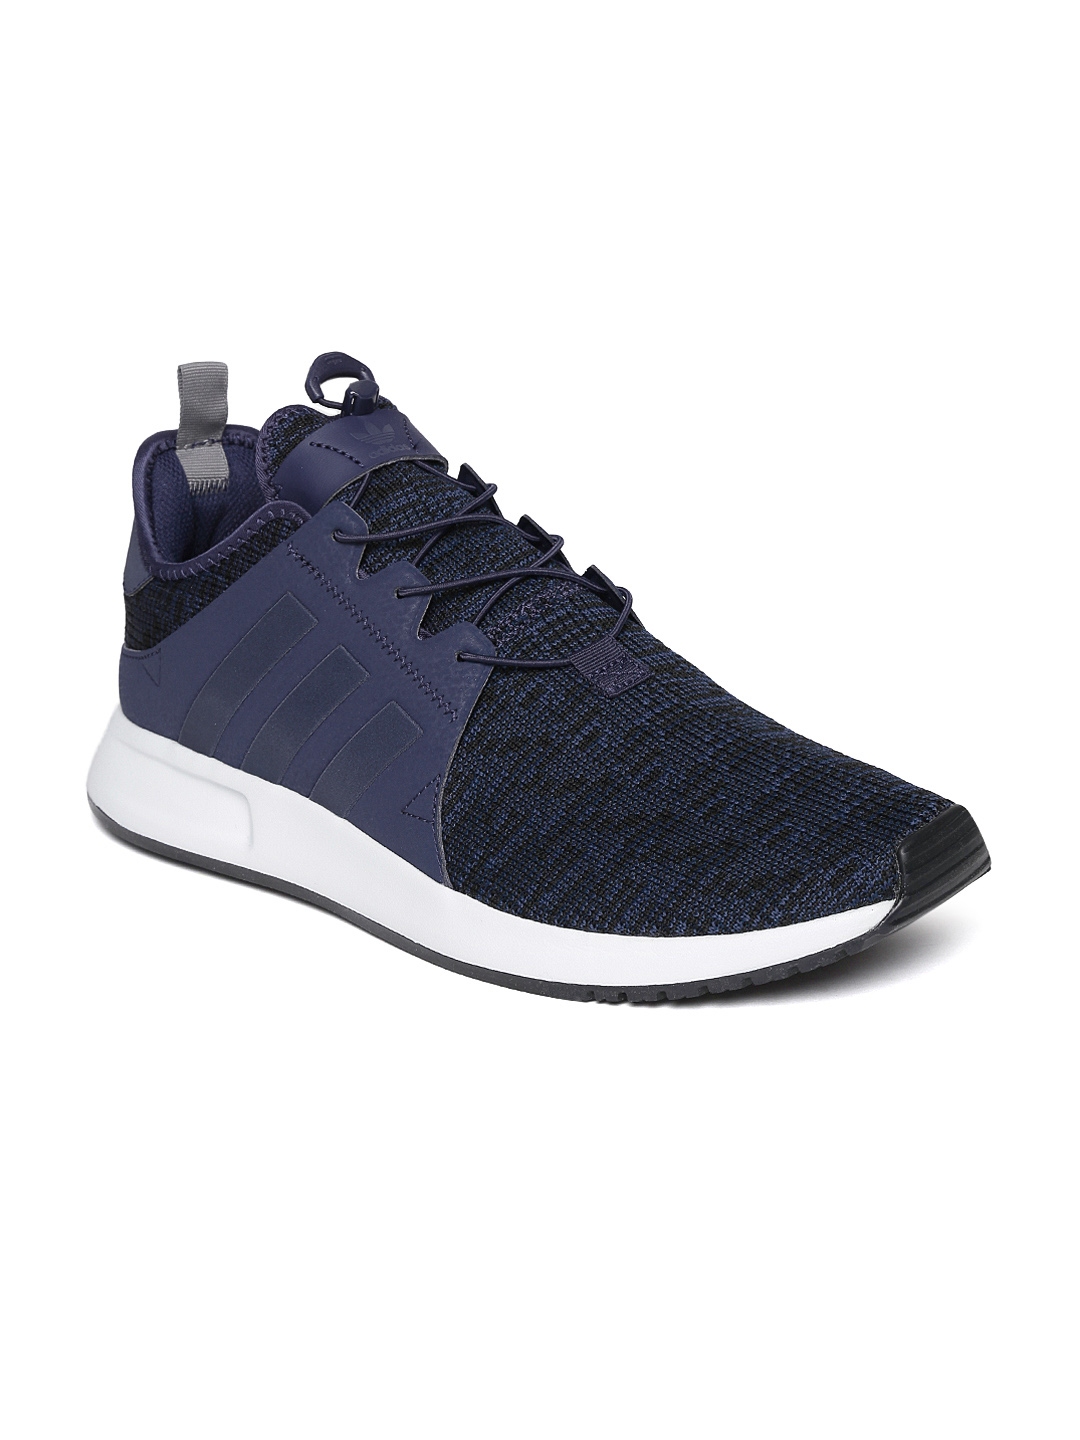 Buy ADIDAS Originals Men Navy Blue X_PLR Sneakers - Casual Shoes for ...